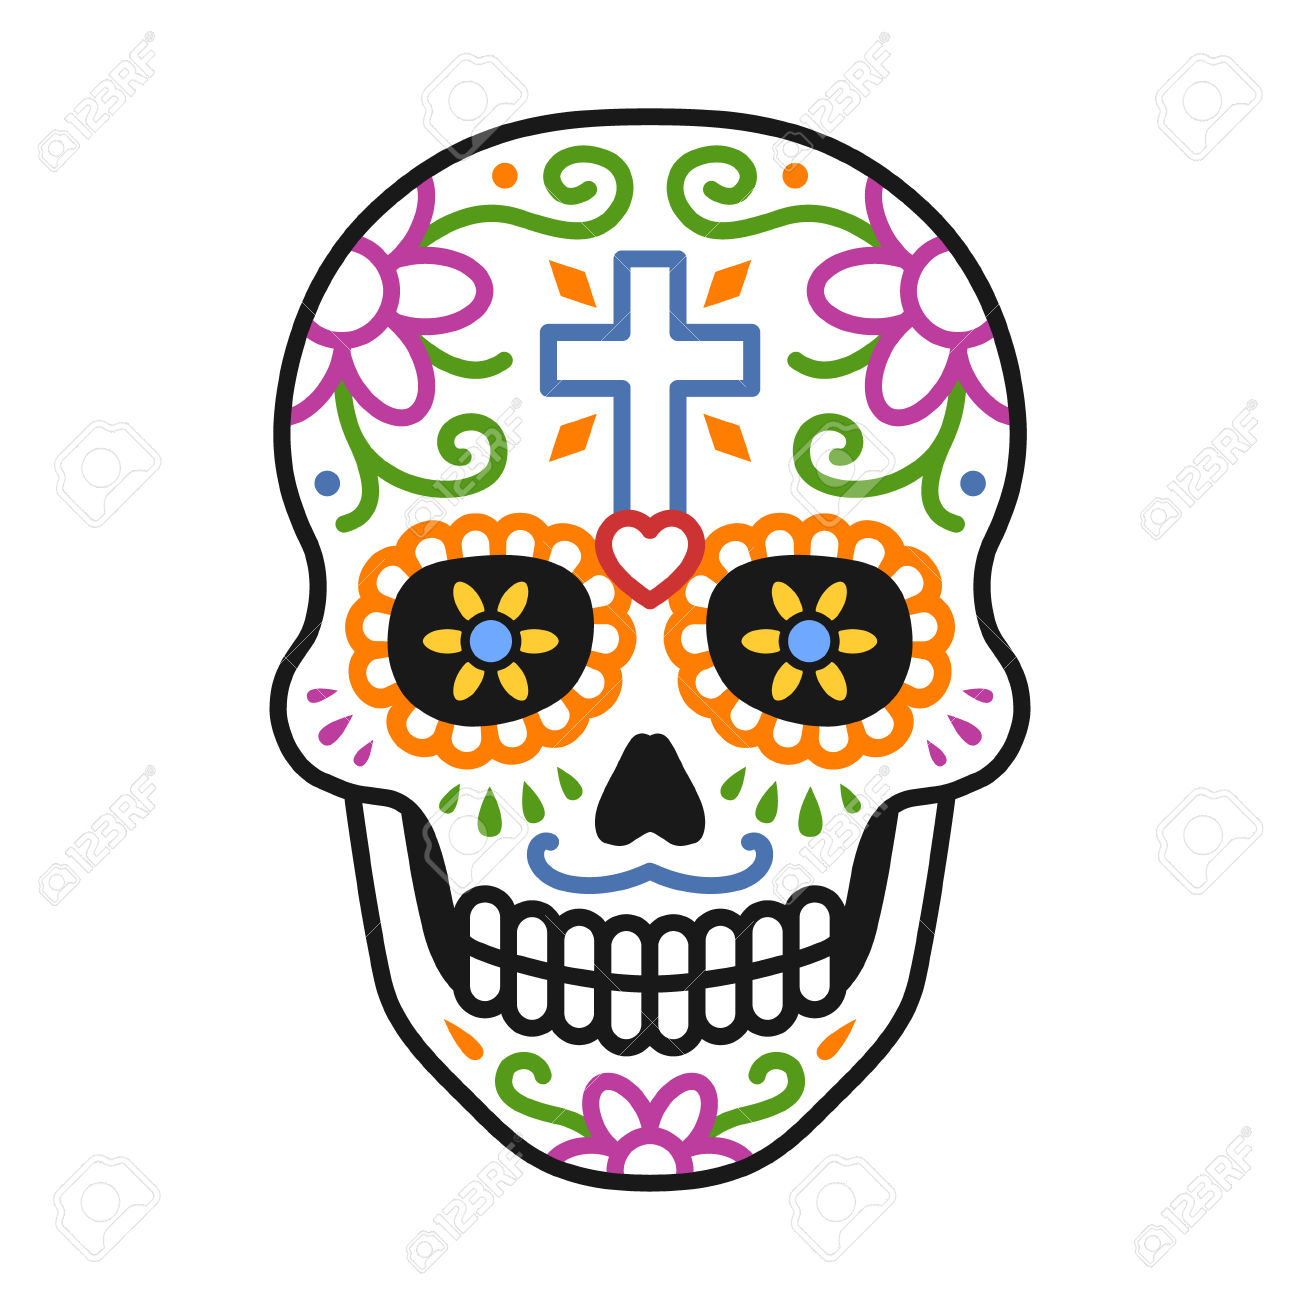 Decorated Skull / Calavera Celebrating Day Of The Dead Line.